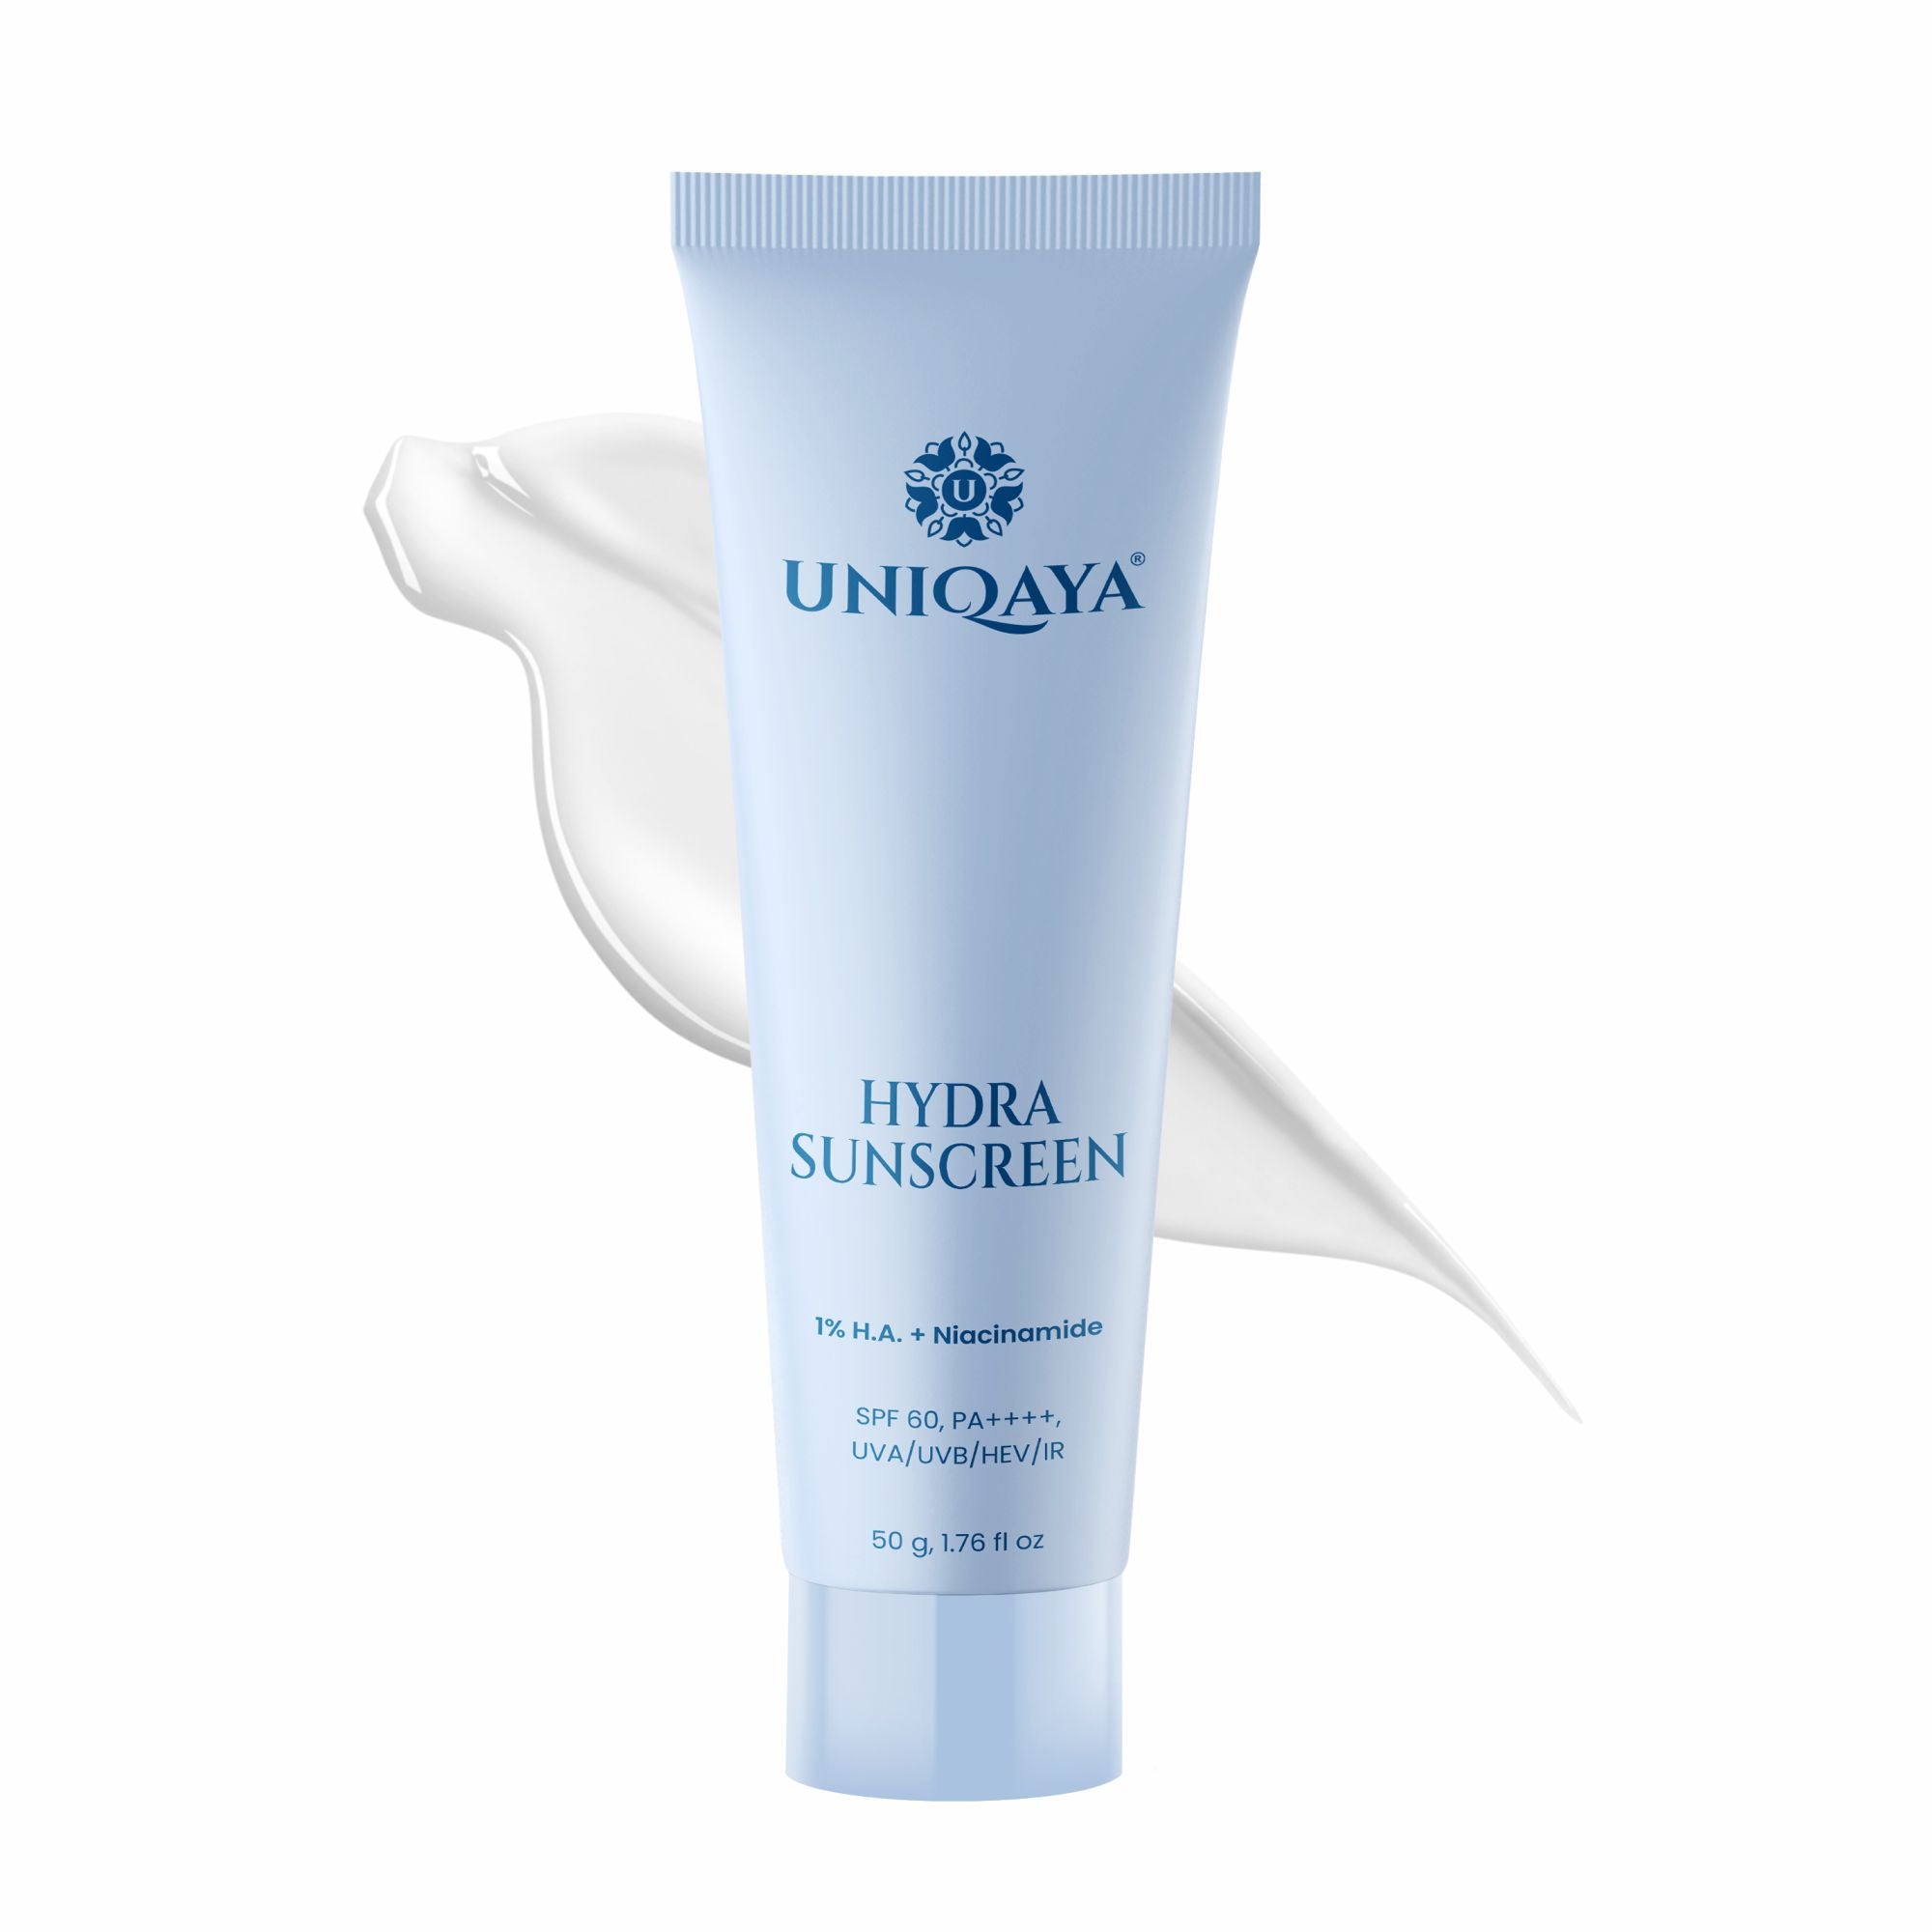 Uniqaya Hydra Sunscreen SPF 60 PA++++ | Hyaluronic Acid & Niacinamide Sunscreen For All Skin Types